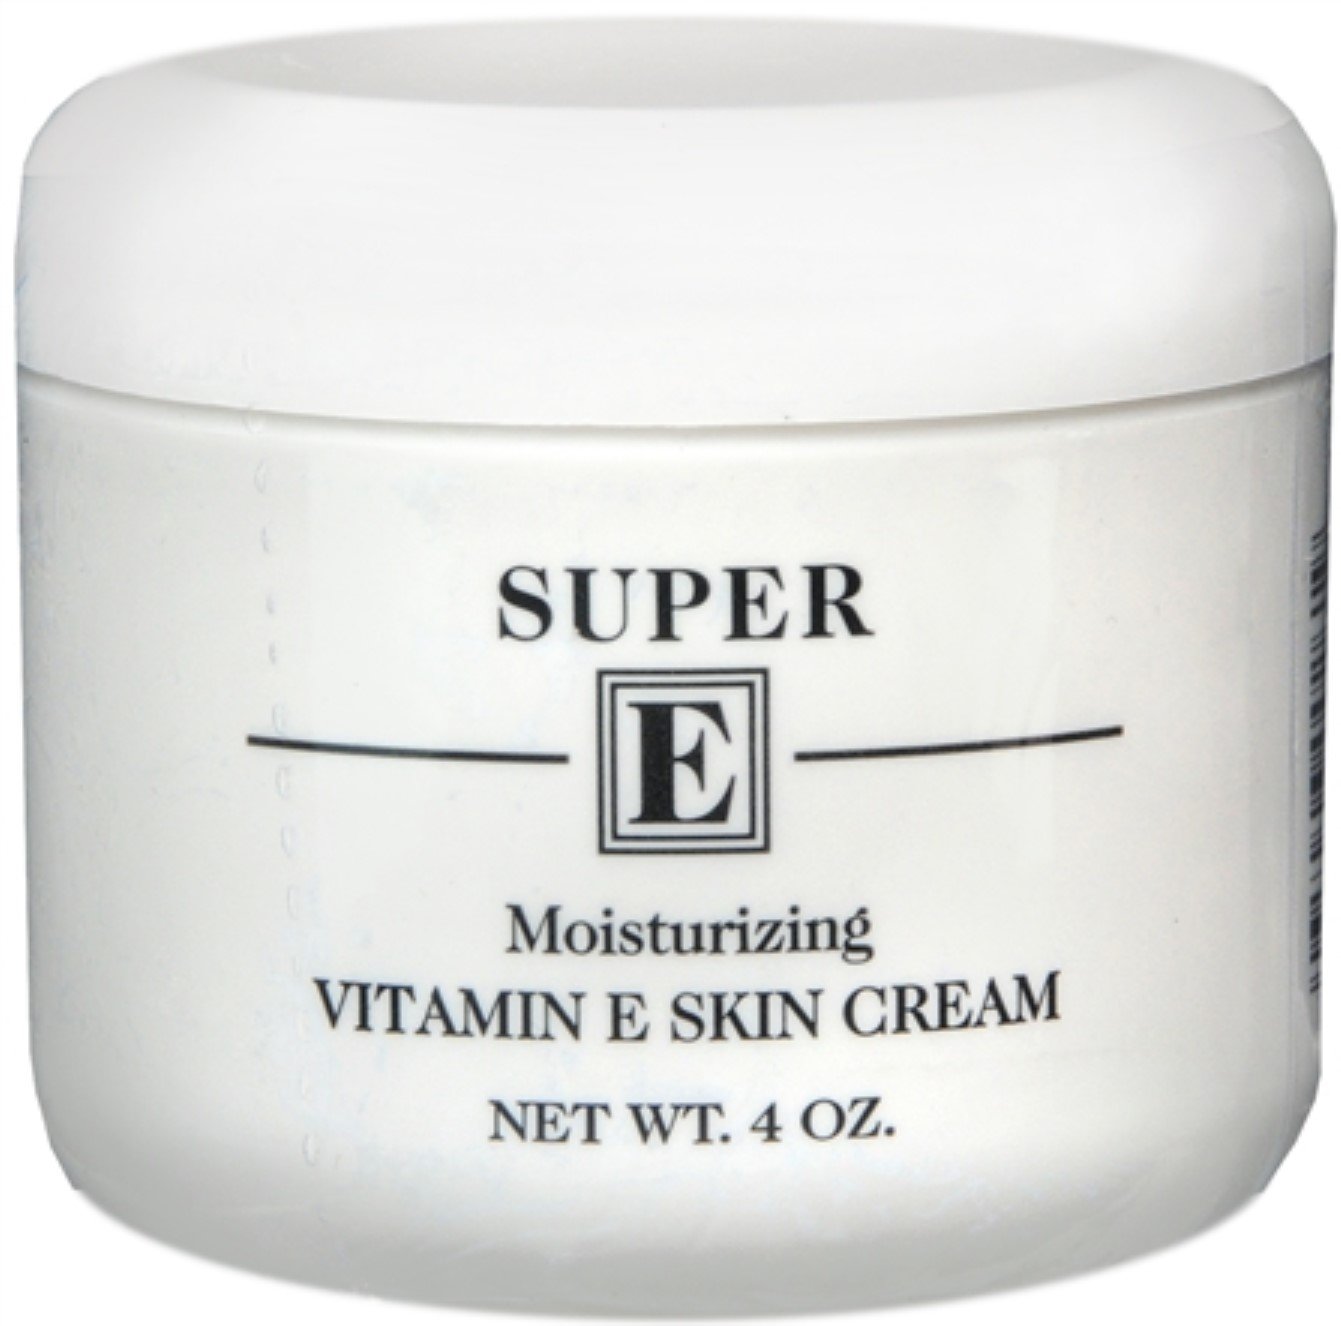 Windmill Super E Vitamin E Skin Cream 4 oz (Pack of 4)